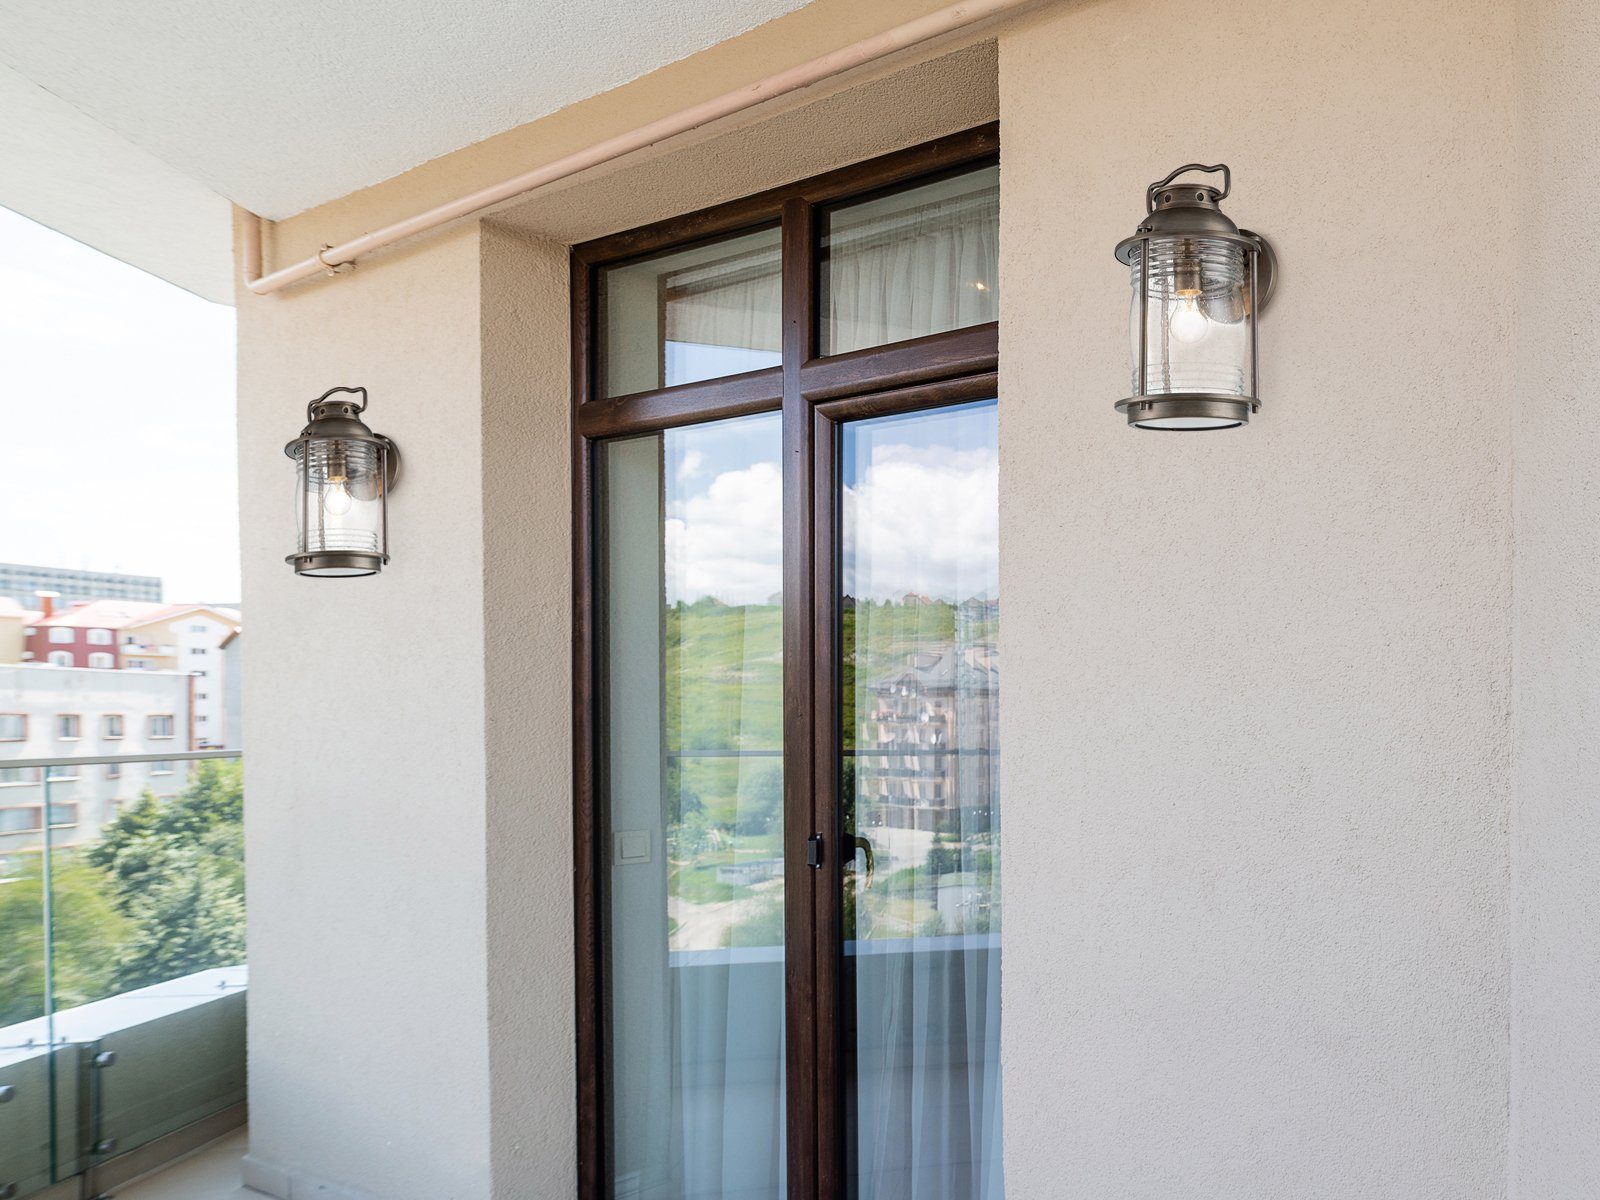 Außen-Wandleuchte, Fassadenlampe Hauswand, LED LED Höhe wechselbar, warmweiß, Carport 40cm meineWunschleuchte Beleuchtung Bronze groß Wandleuchte